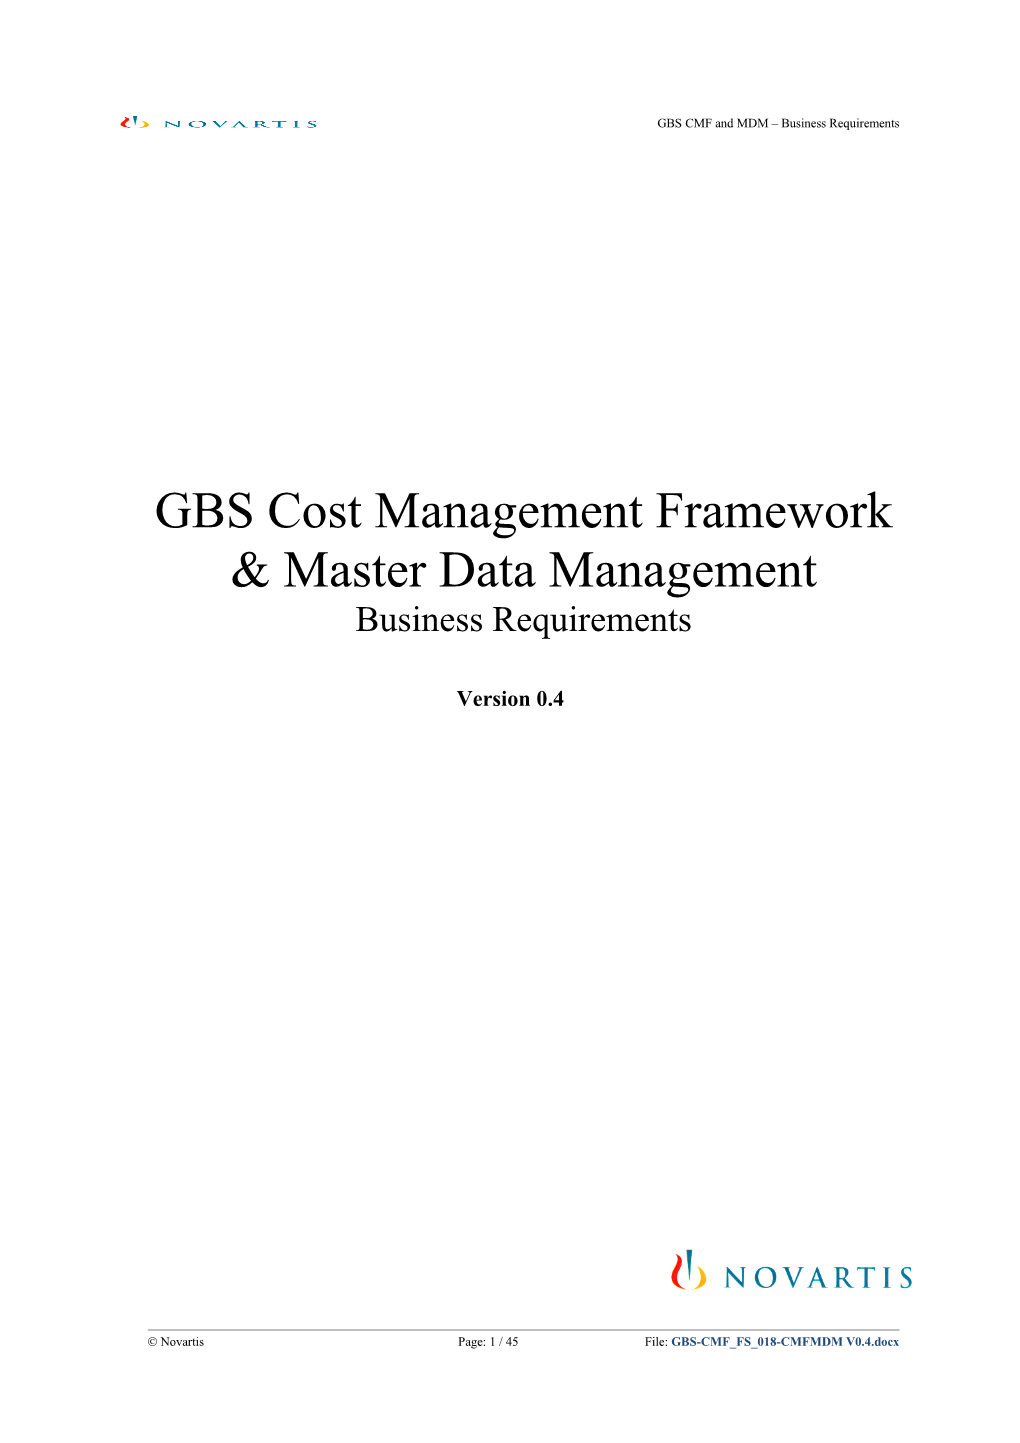 GBS Cost Management Framework & Master Data Management